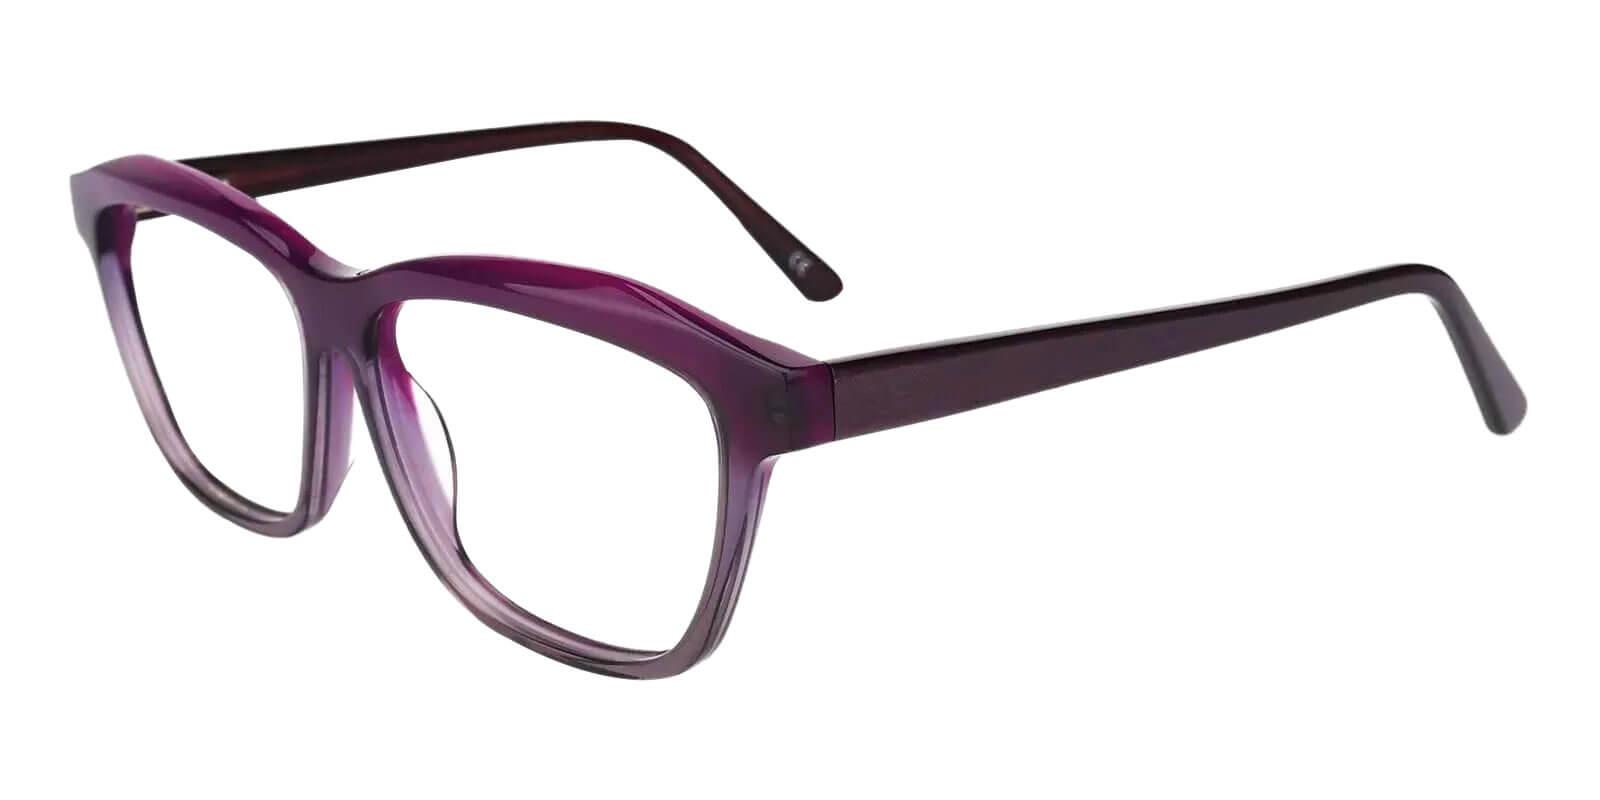 Sonia Purple Acetate Eyeglasses , SpringHinges , UniversalBridgeFit Frames from ABBE Glasses